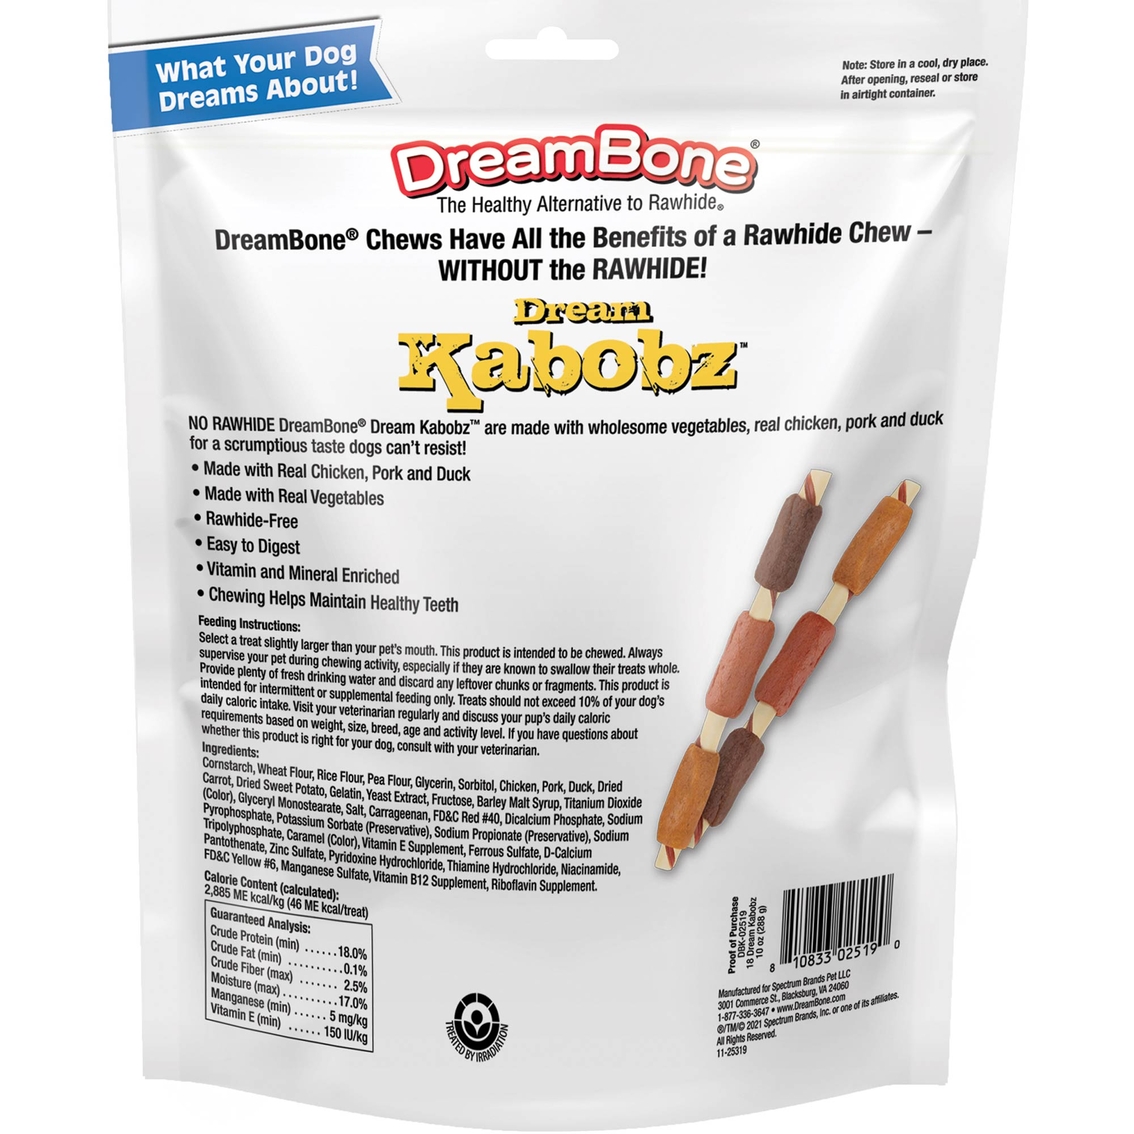 Spectrum Dream Bone Dream Kabobz Rawhide Free Chews Dog Treats 18 ct. - Image 2 of 2